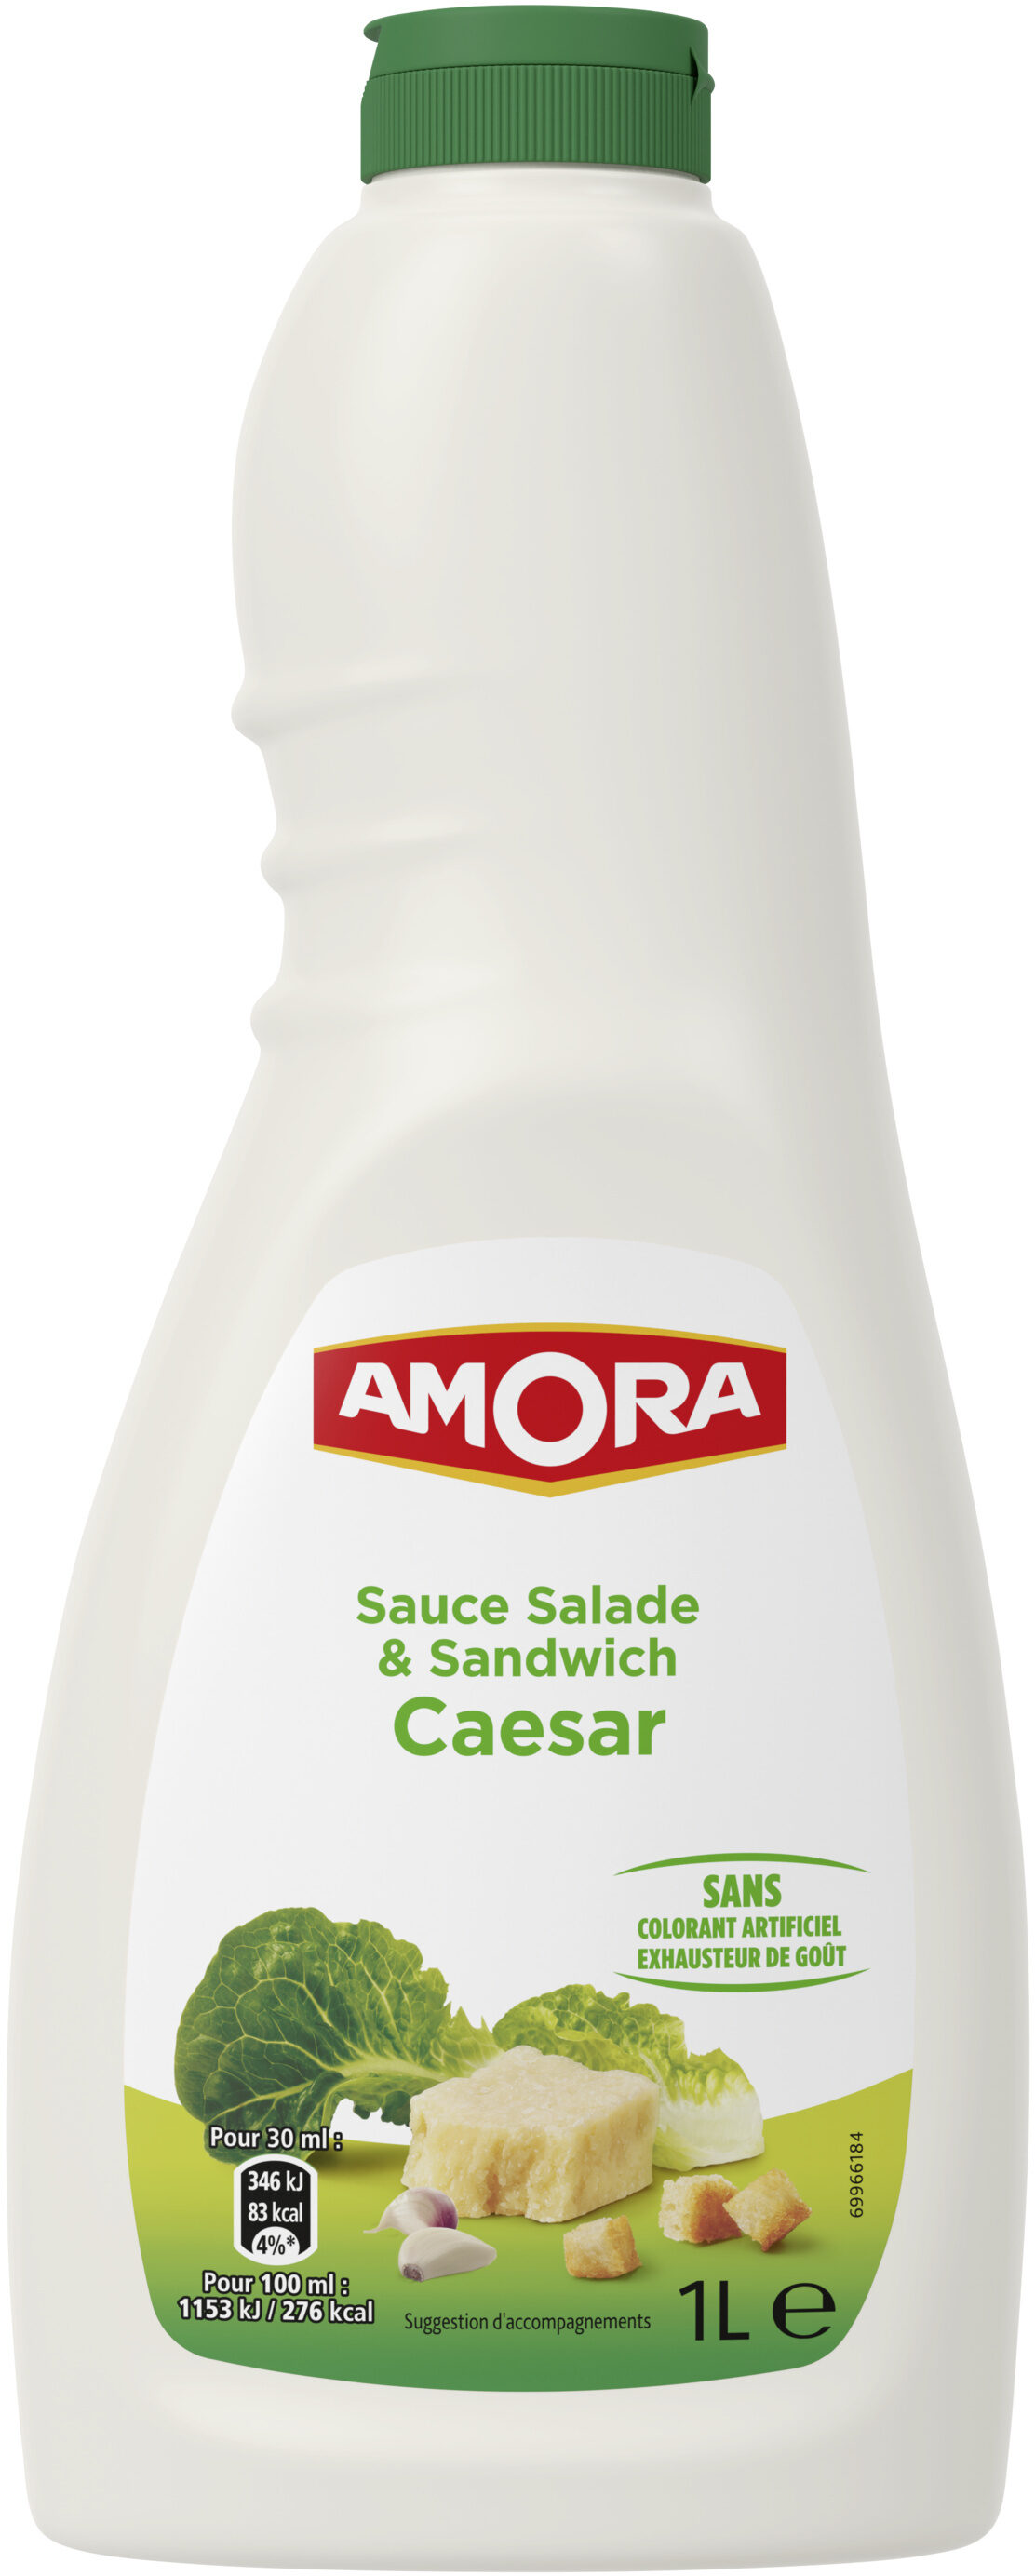 Amora Sauce Salade & Sandwich Ceasar 1L - Product - fr